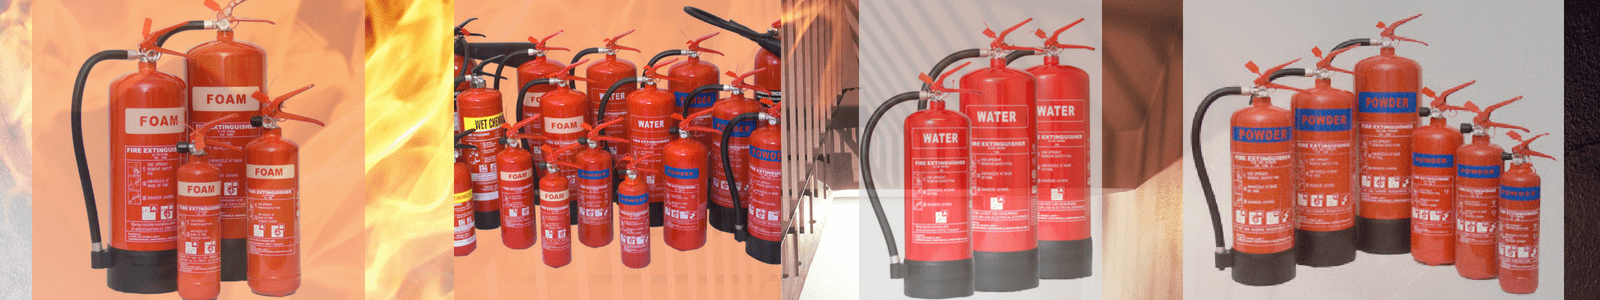 Fire Extinguishers Victory Fire Ltd 020 7511 7444 01708 252 144 3563